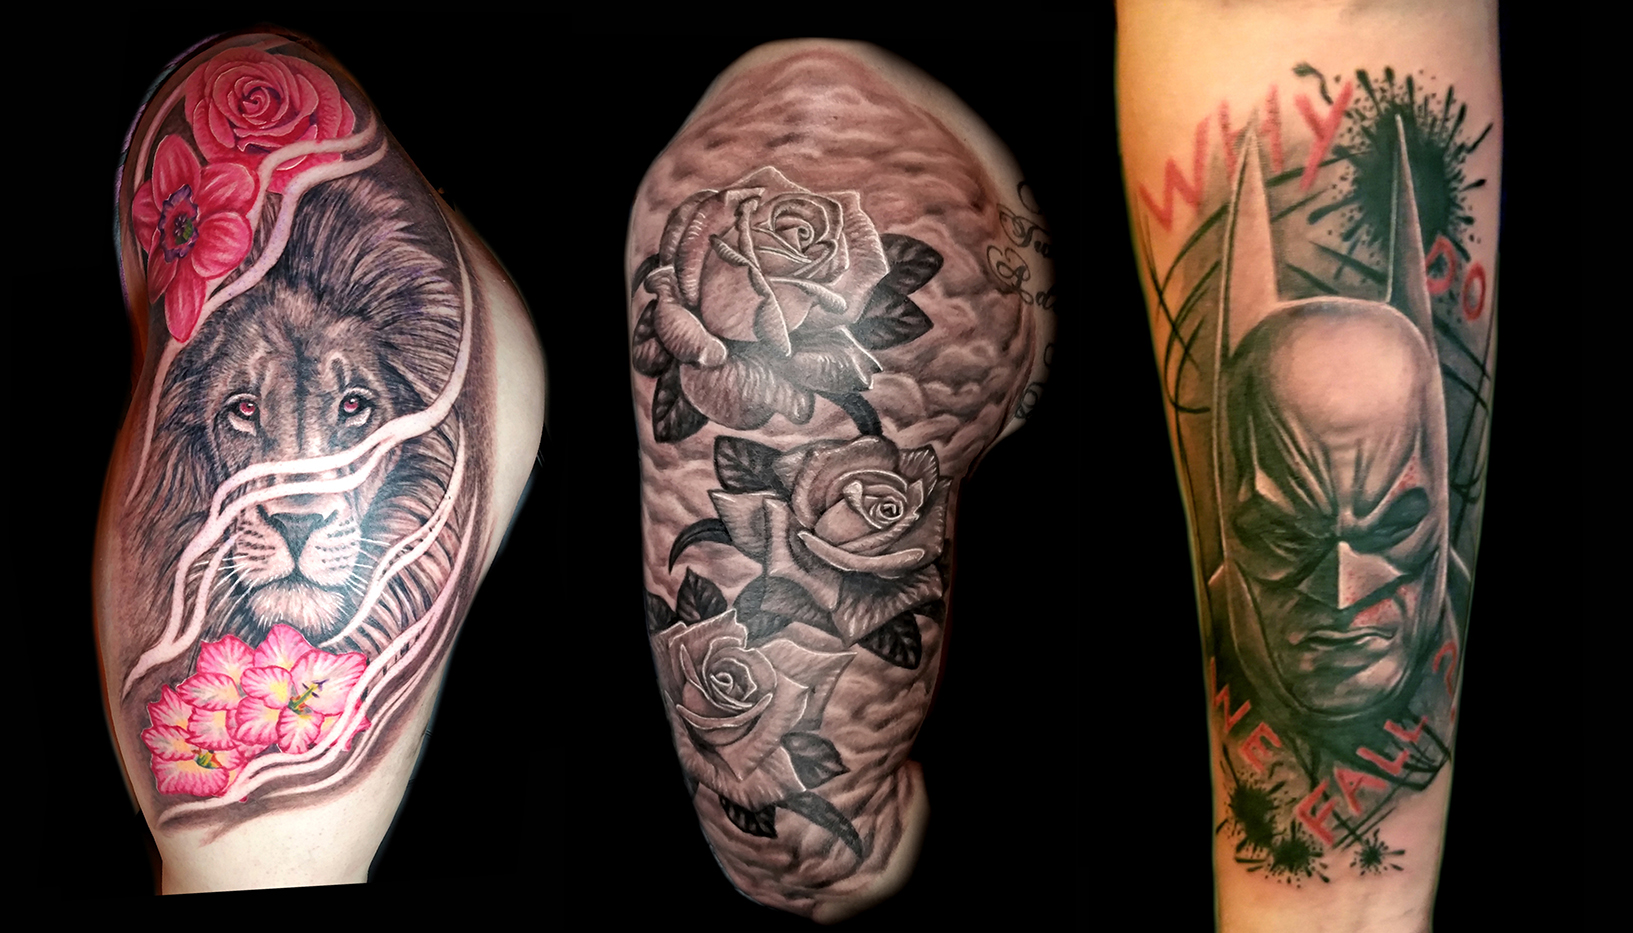 Masterpiece Tattoo- Top tattoo shop in San Francisco California